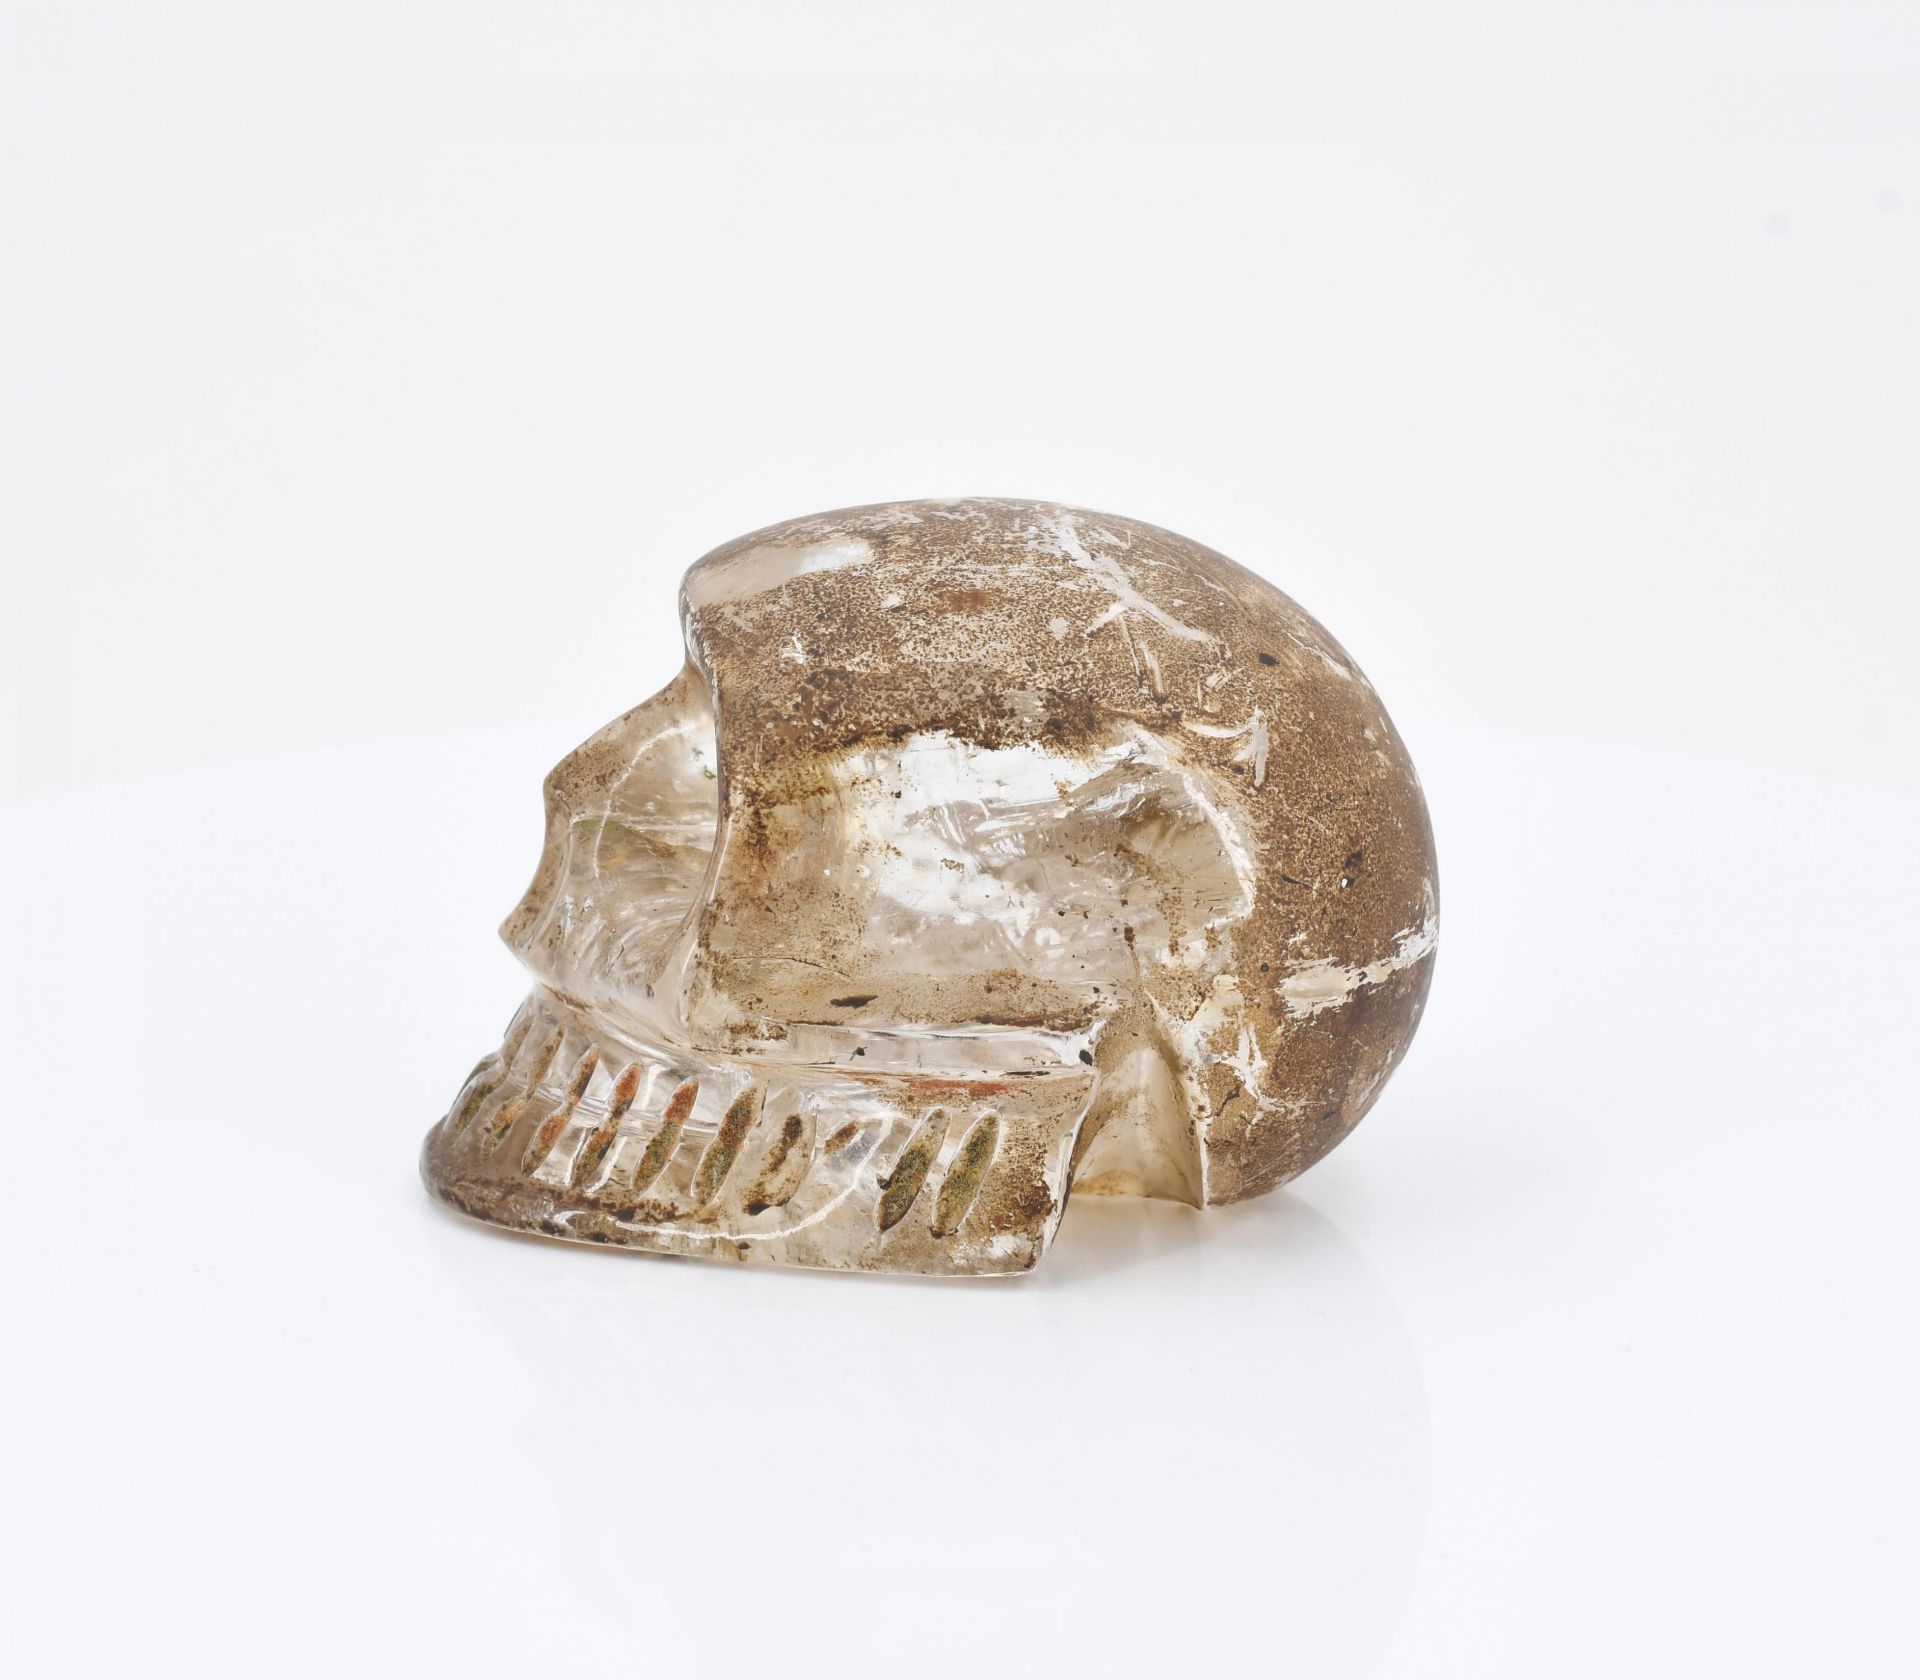 Small skull - Image 3 of 6